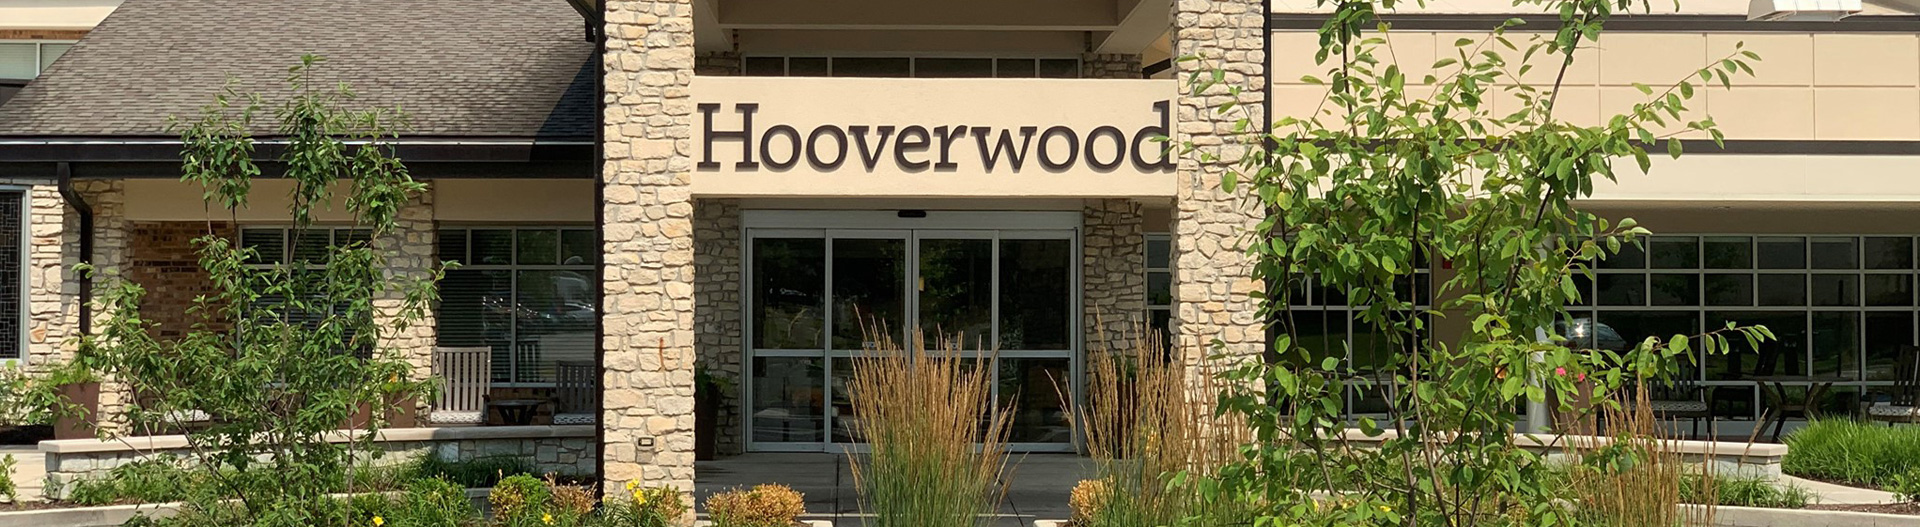 Hooverwood Living